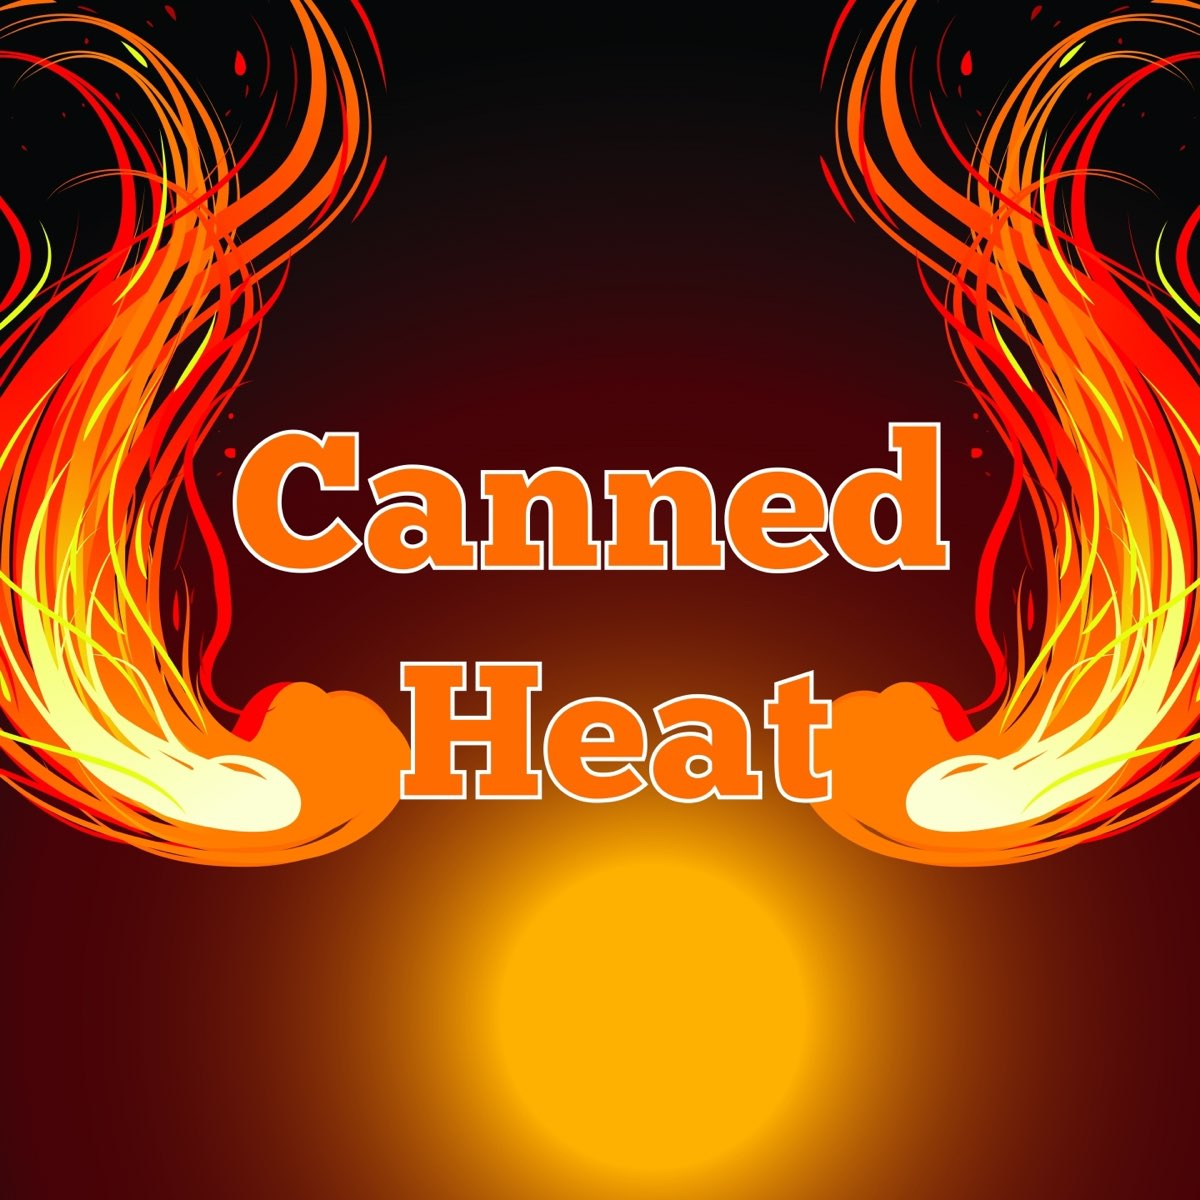 Heat. Canned Heat album Live at Topanga Corral. Canned Heat album the big Heat.